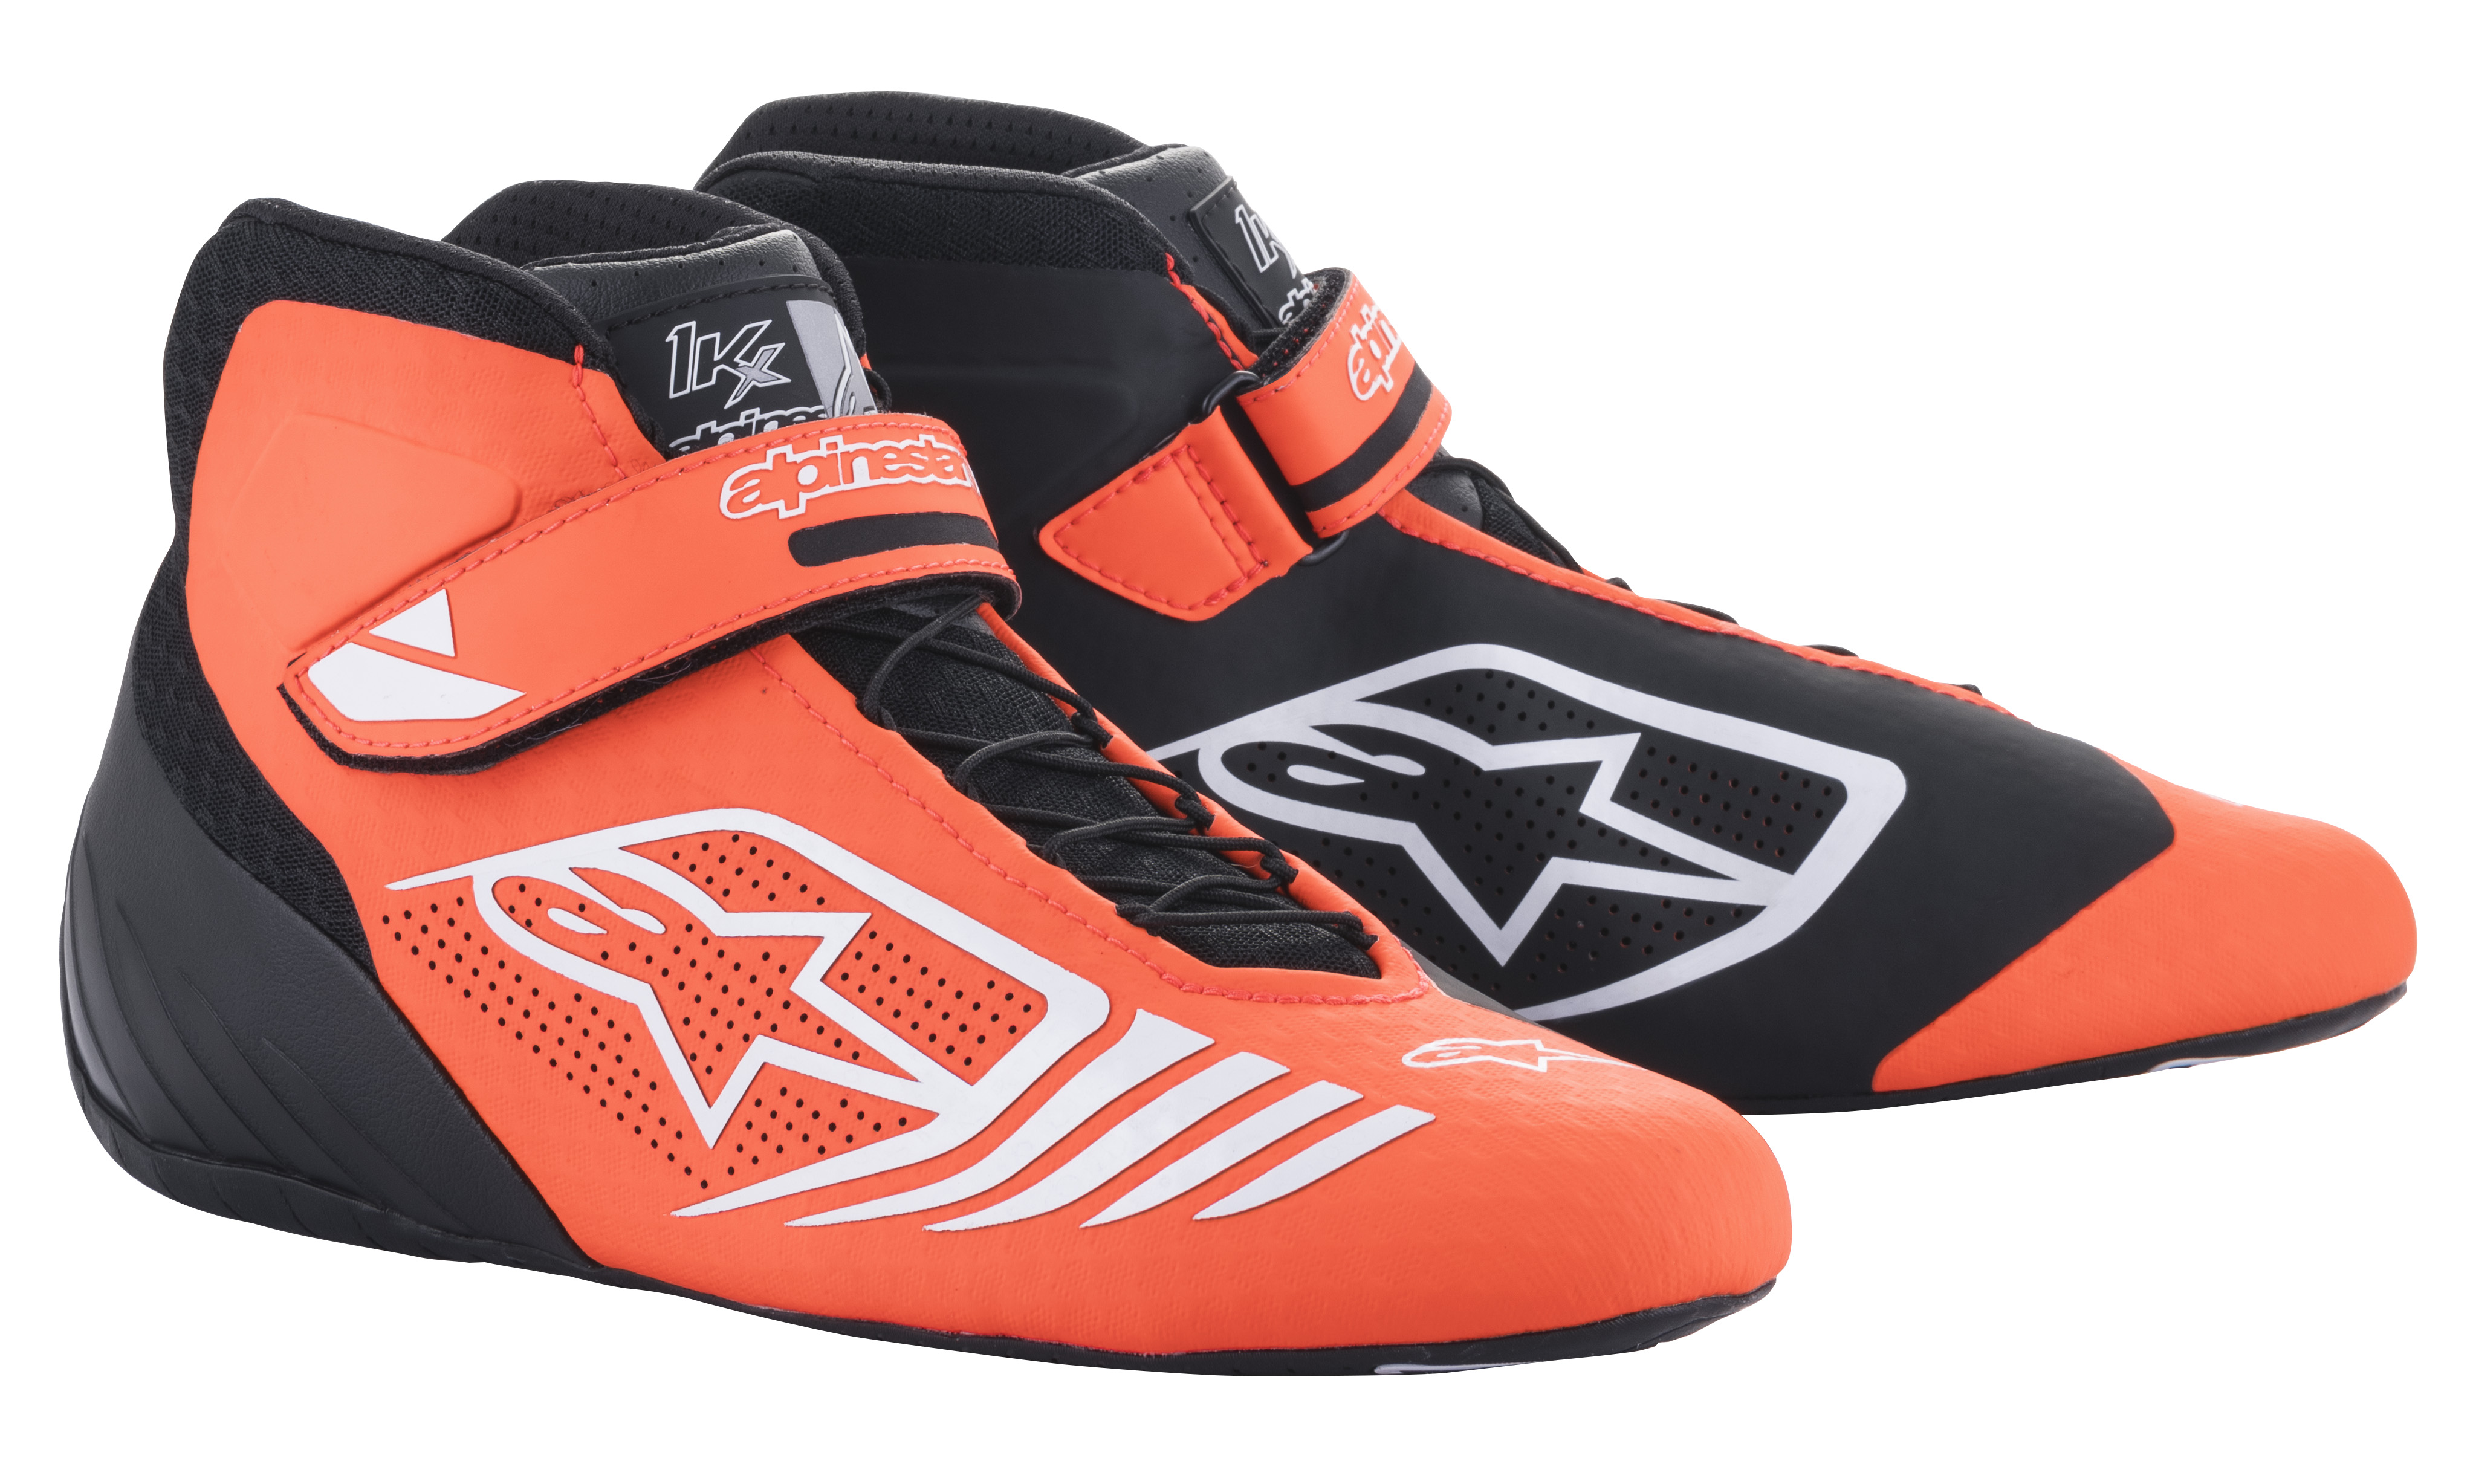 Picture of 2022 Tech-1 KX shoes black/orange/white